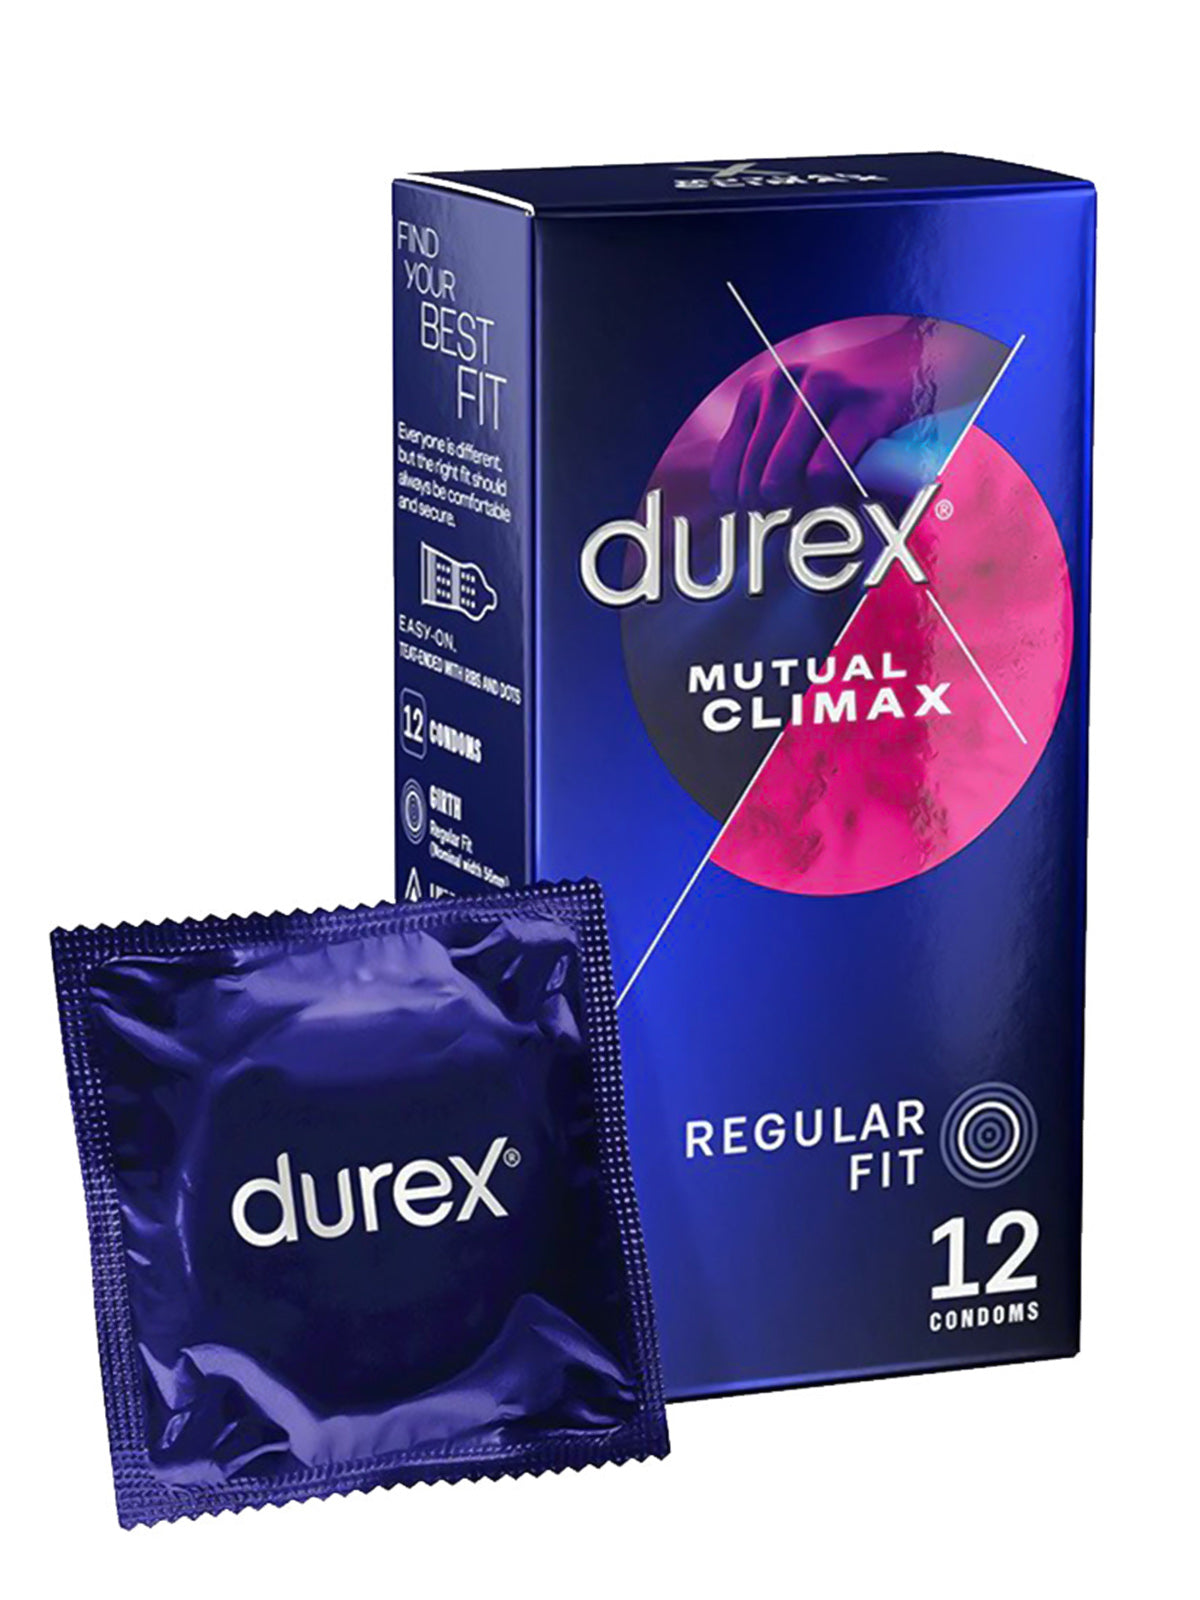 Durex (UK) Mutual Climax Condoms – 12 Pack